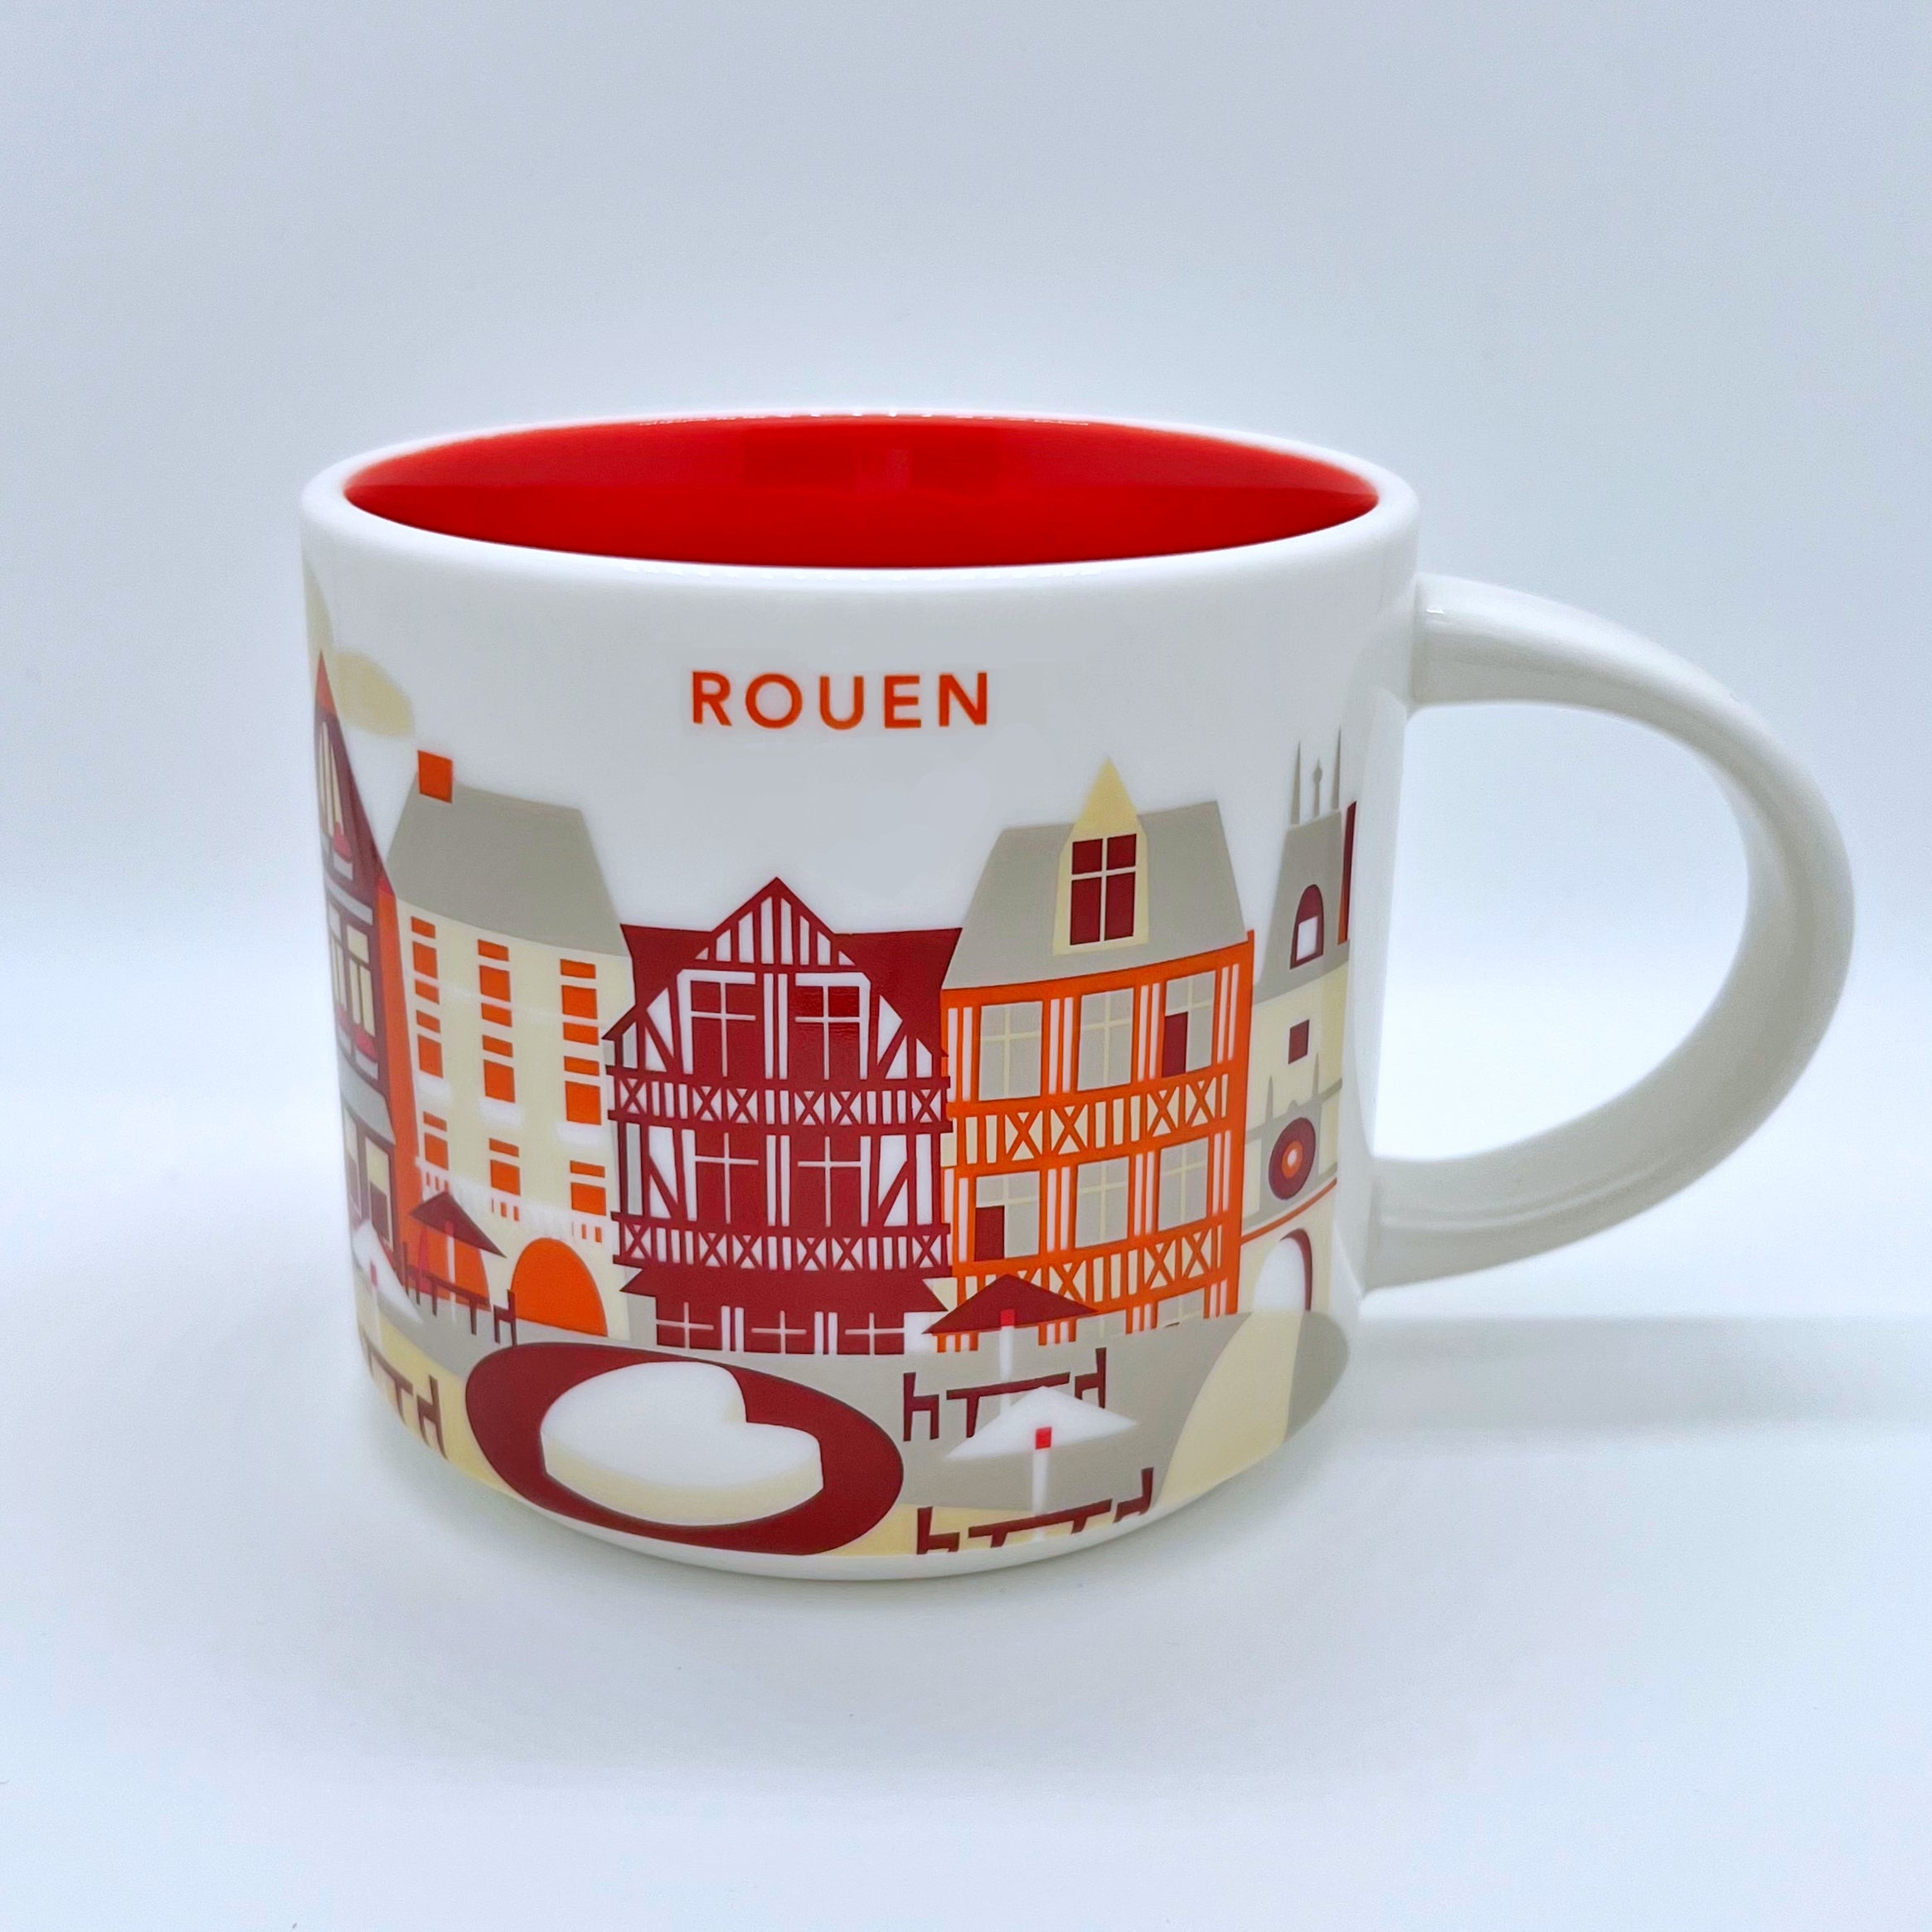 Rouen City Kaffee Tasse